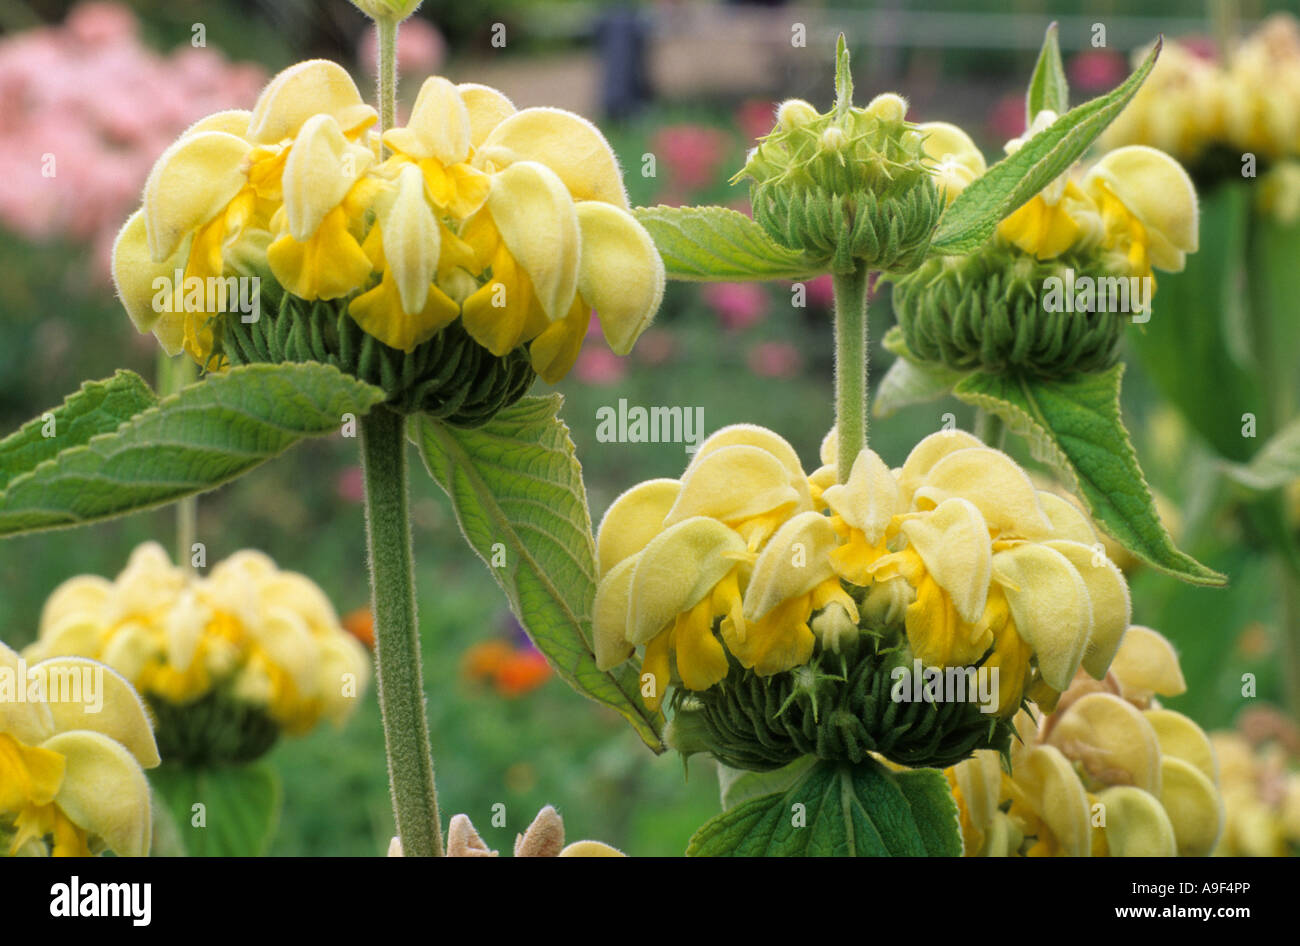 Phlomis russeliana, syn. P. samia, yellow flowers, garden plant Stock Photo